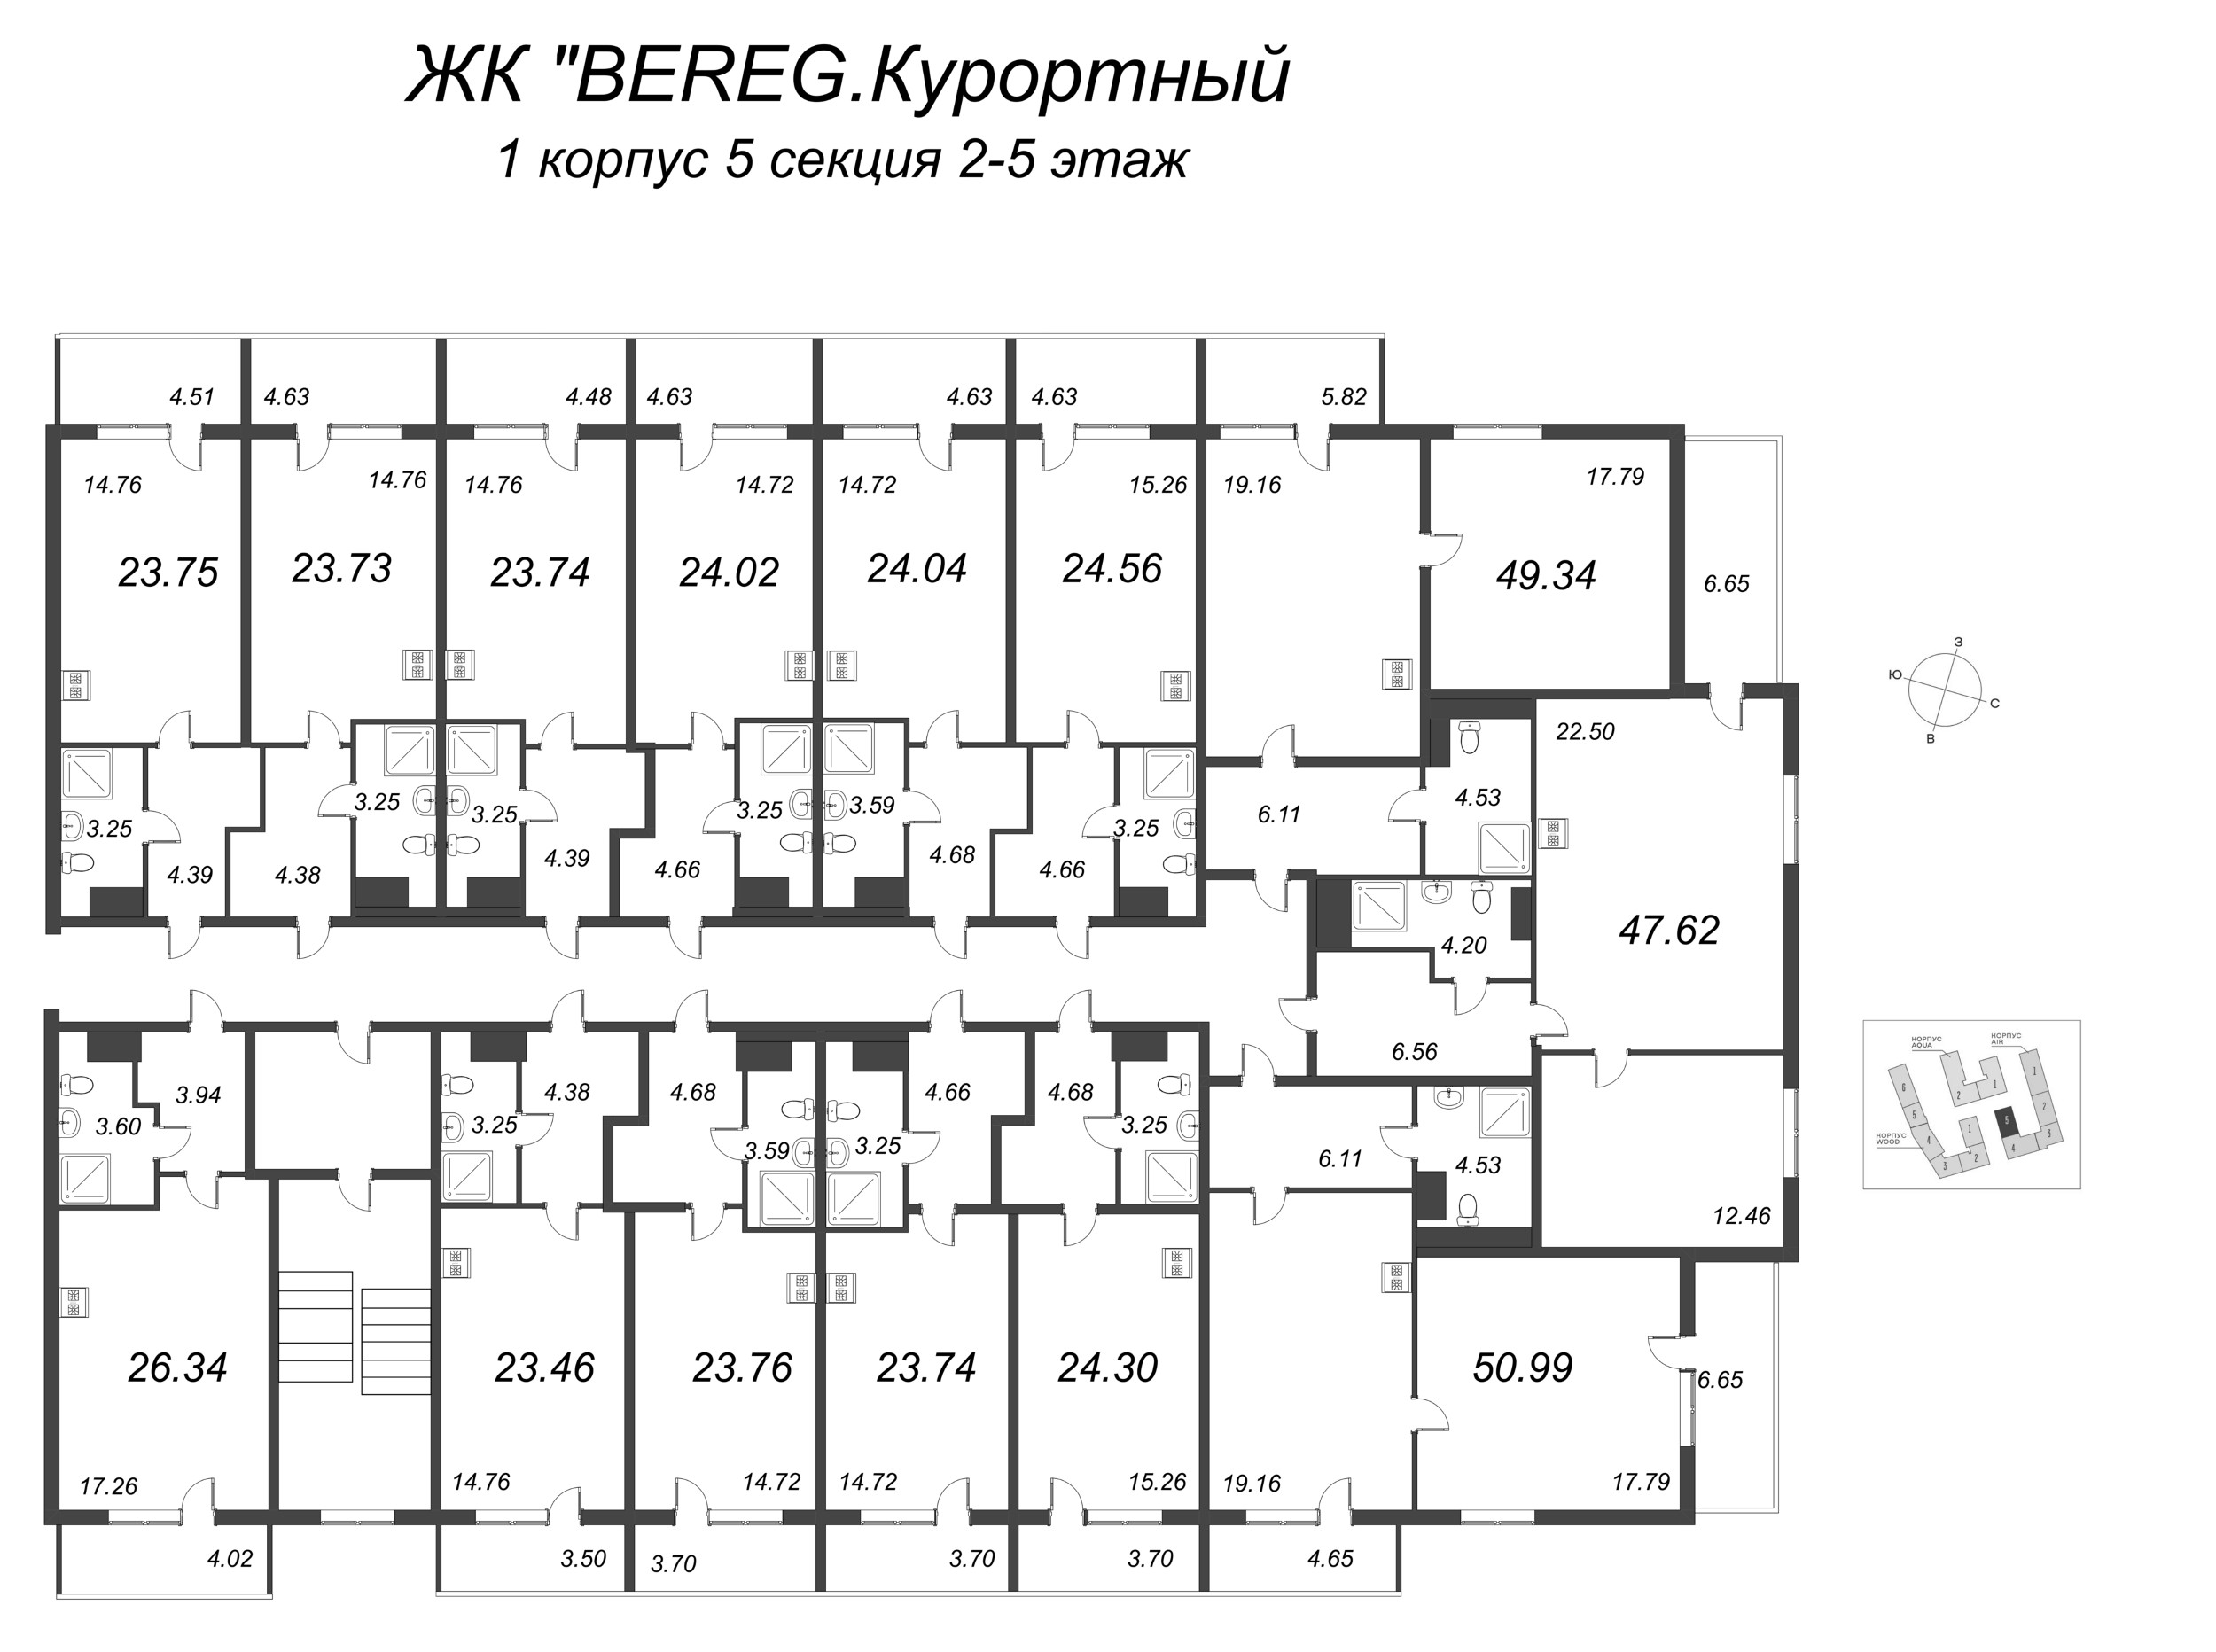 2-комнатная (Евро) квартира, 49.34 м² - планировка этажа